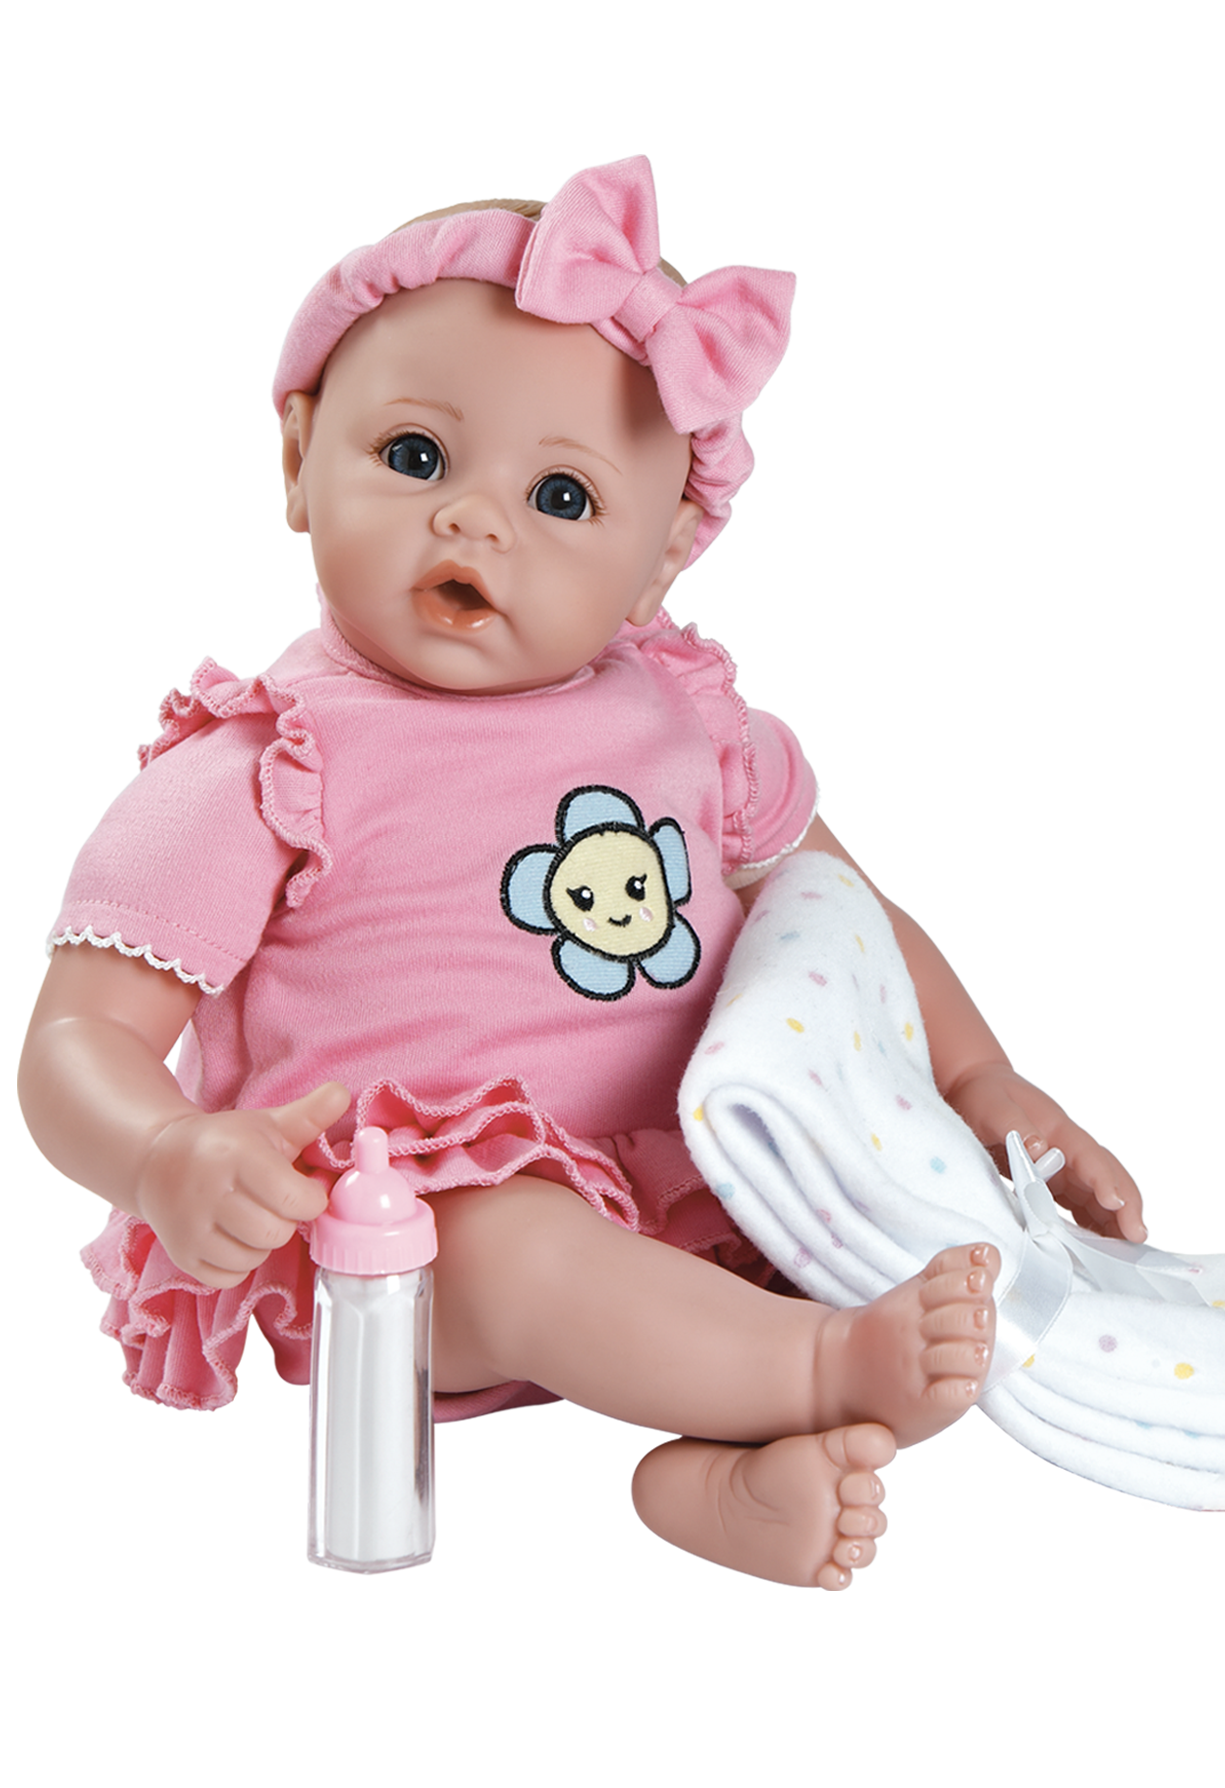 Aliexpress.com : Buy American girl doll toys 40cm full ...